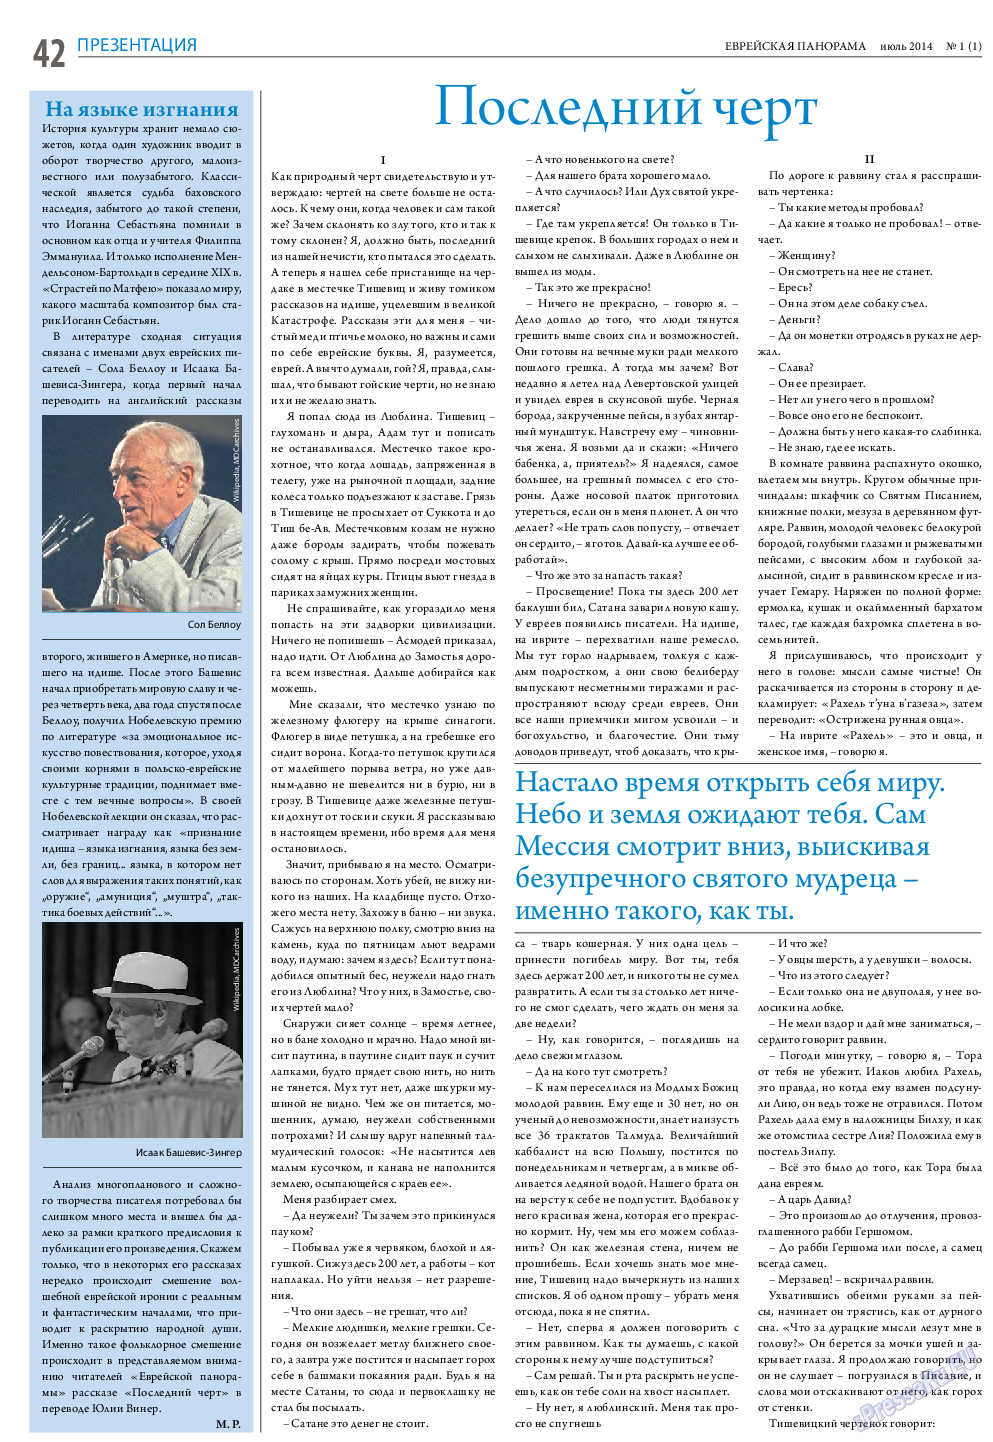 Еврейская панорама, газета. 2014 №1 стр.42